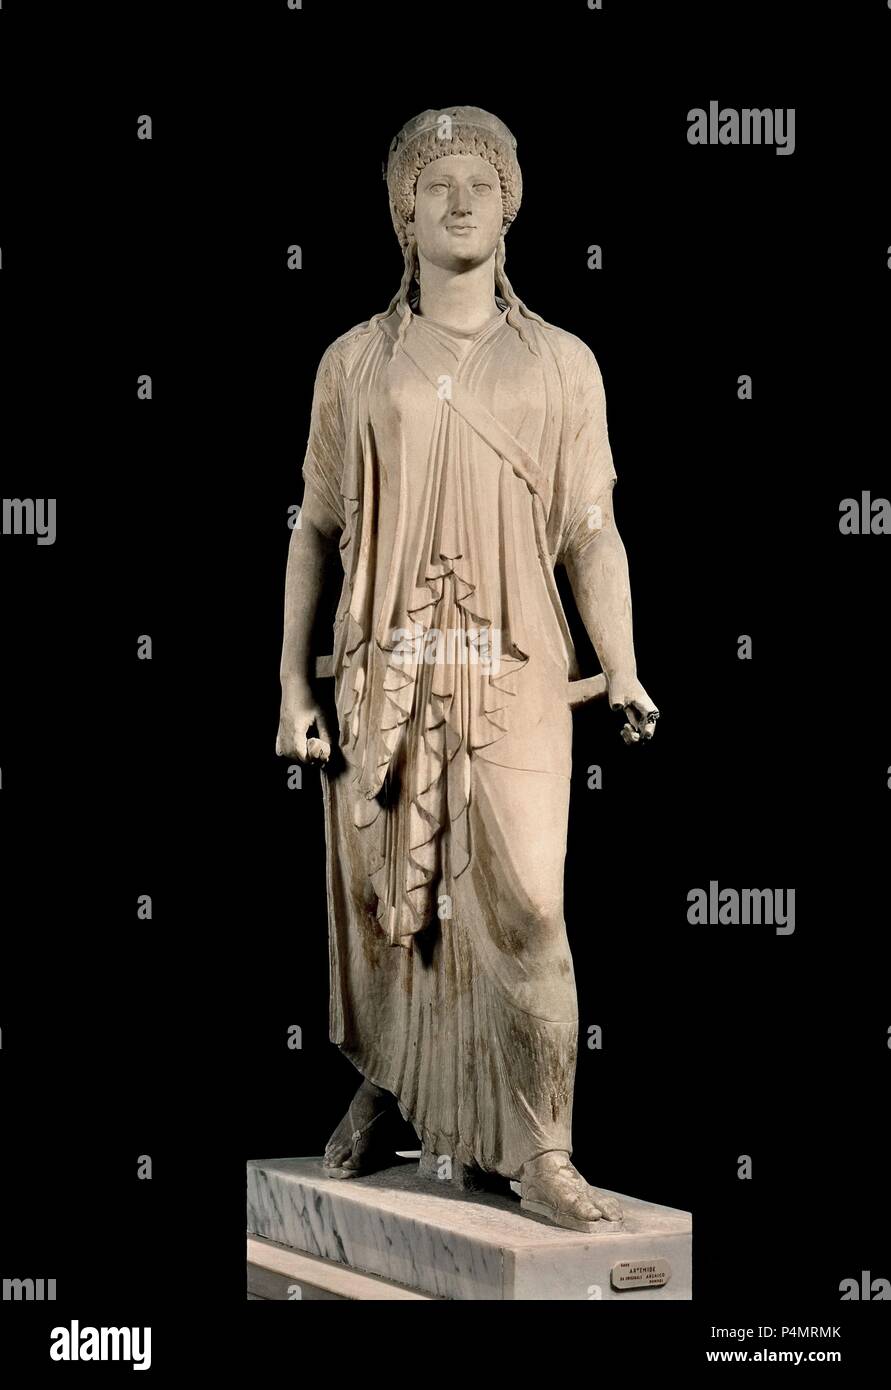 *ARTEMIDE ARCAISTICA. Author: Praxiteles (4th cent. BCE) (school). Location: NATIONAL MUSEUM OF ARCHAEOLOGY, NEAPEL, ITALIA. Stock Photo